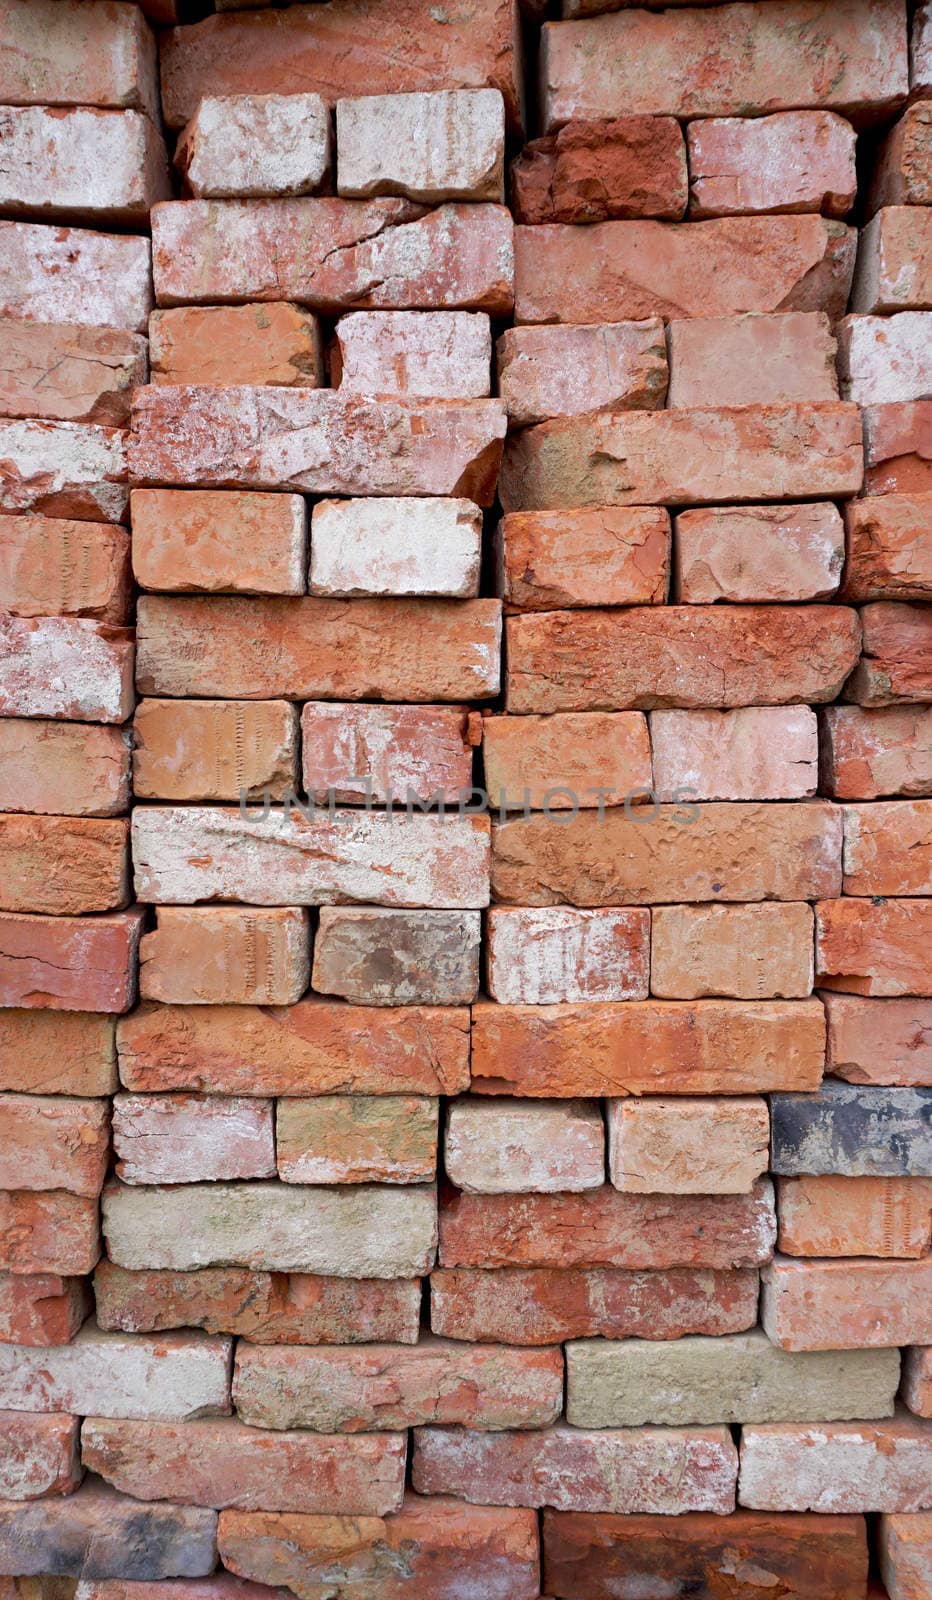 bricks stacking by polarbearstudio